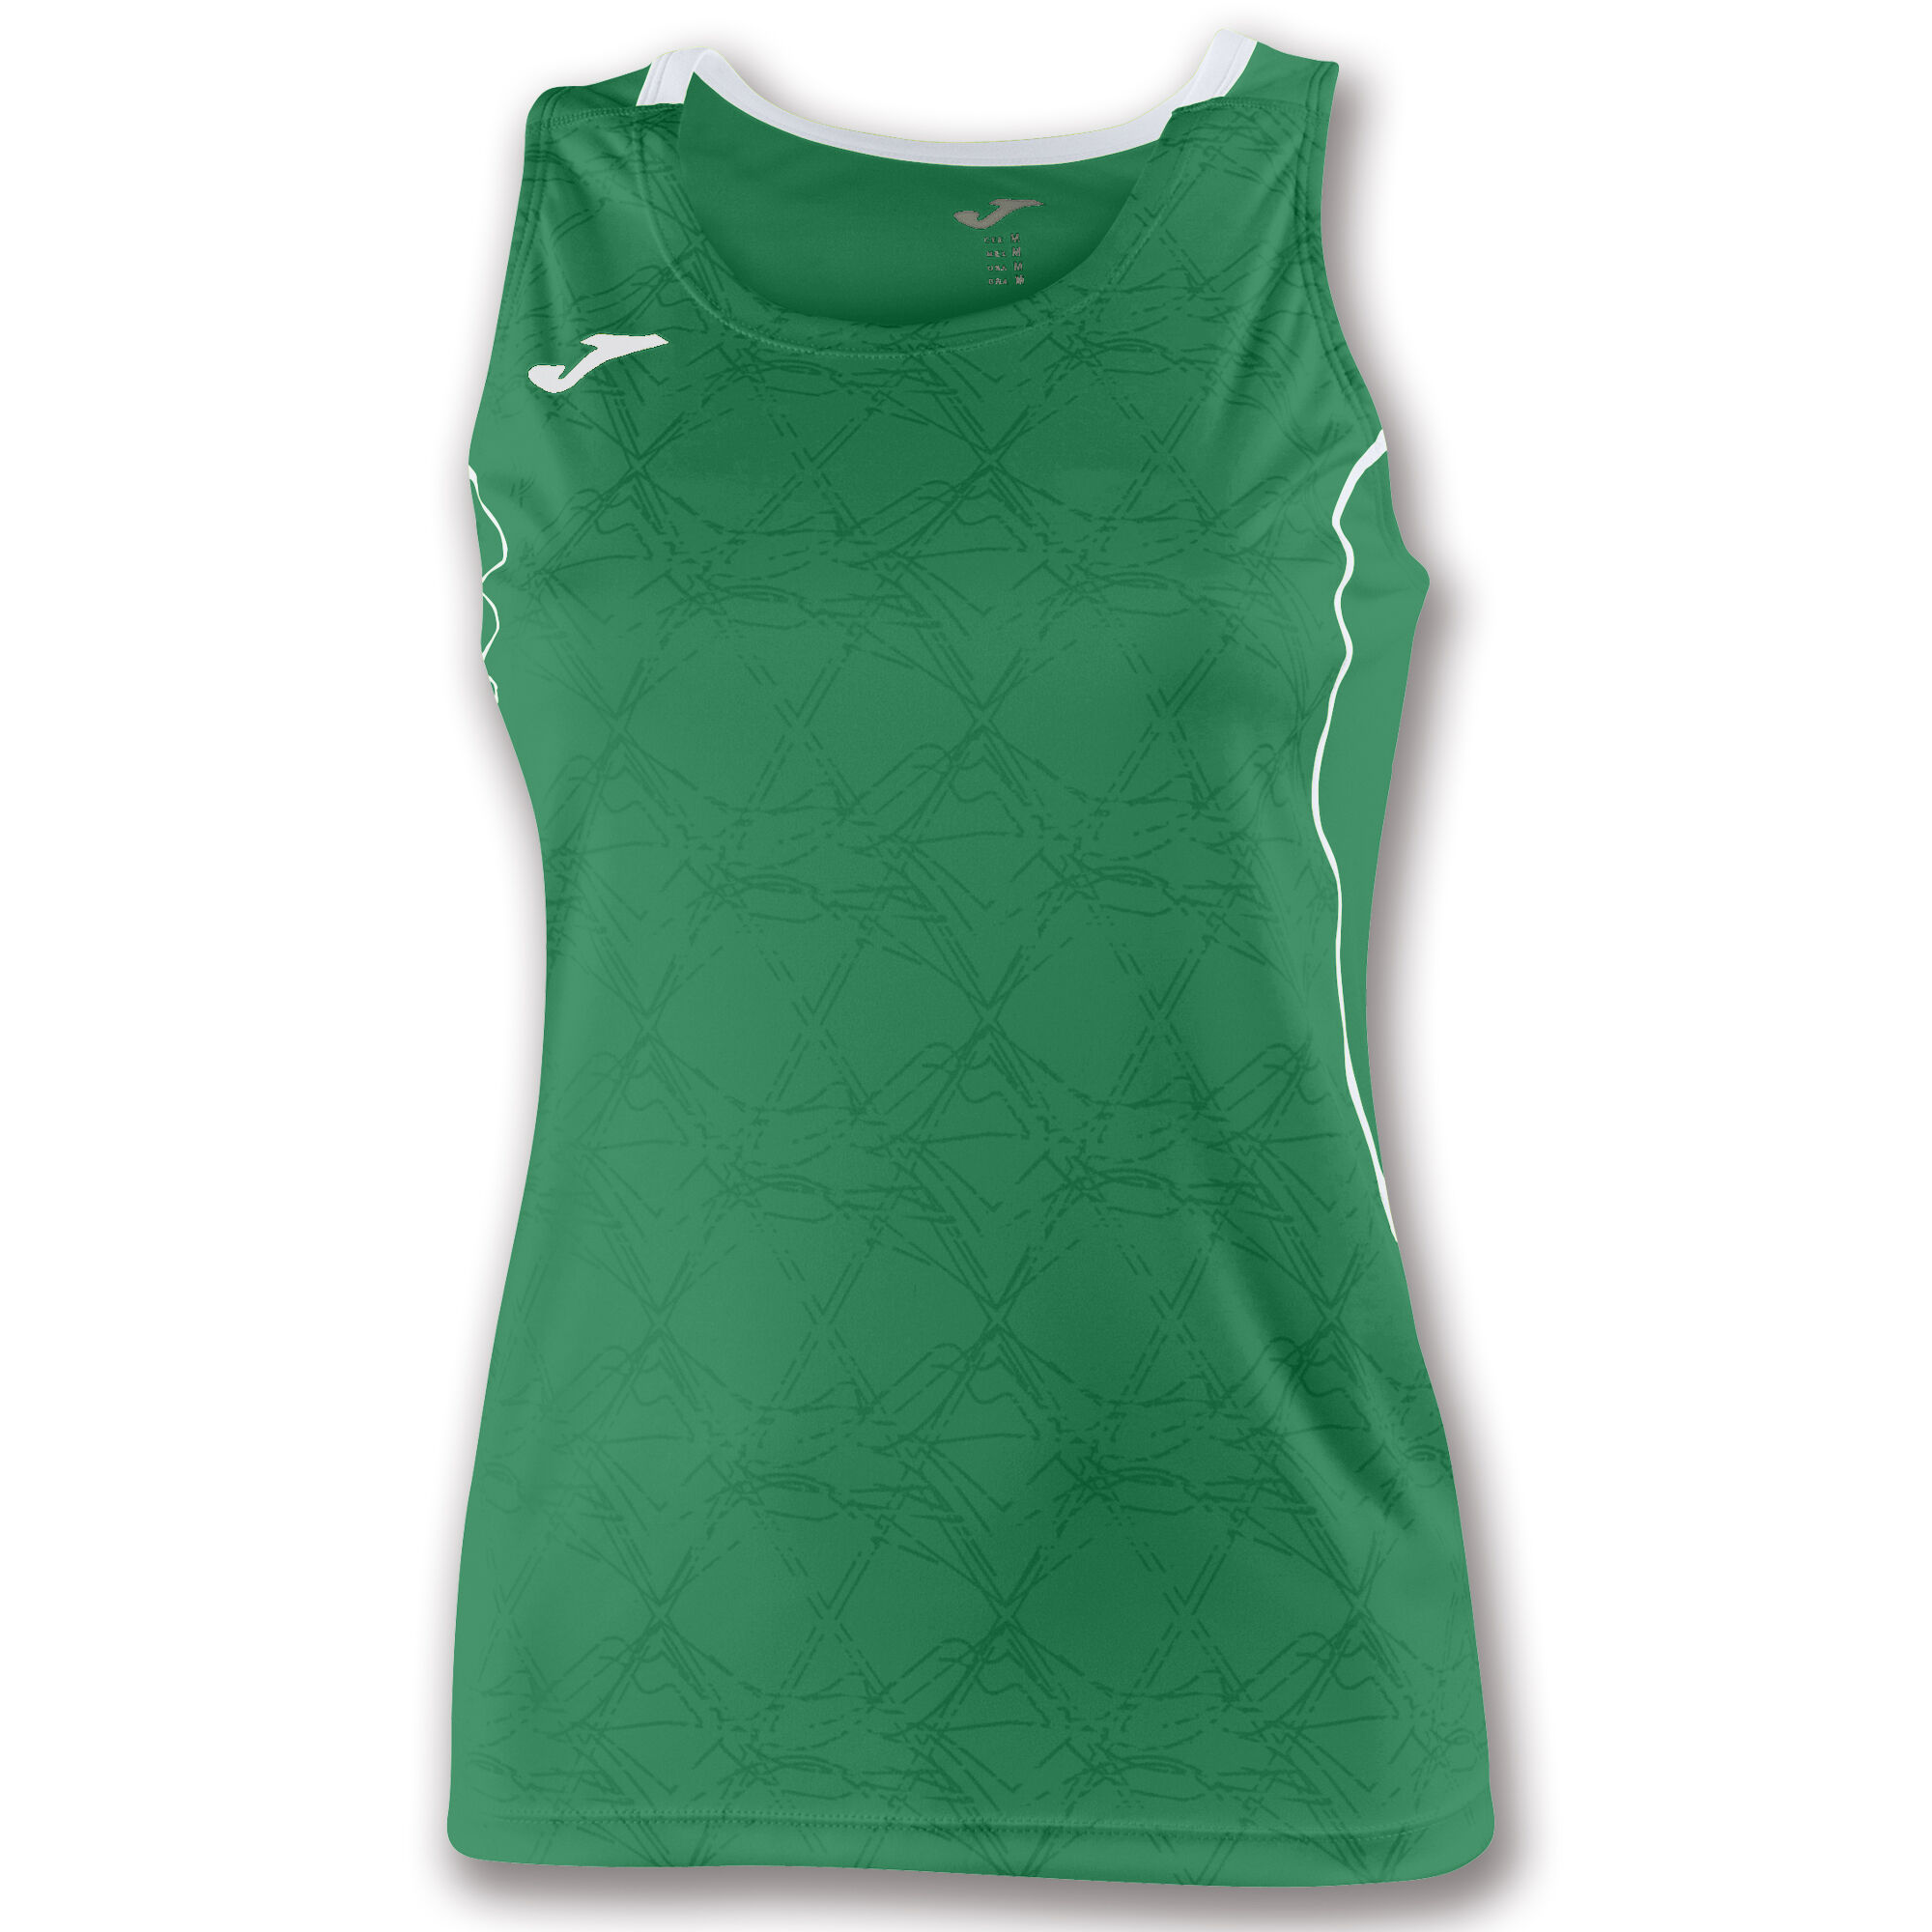 Camiseta sin mangas mujer Olimpia verde